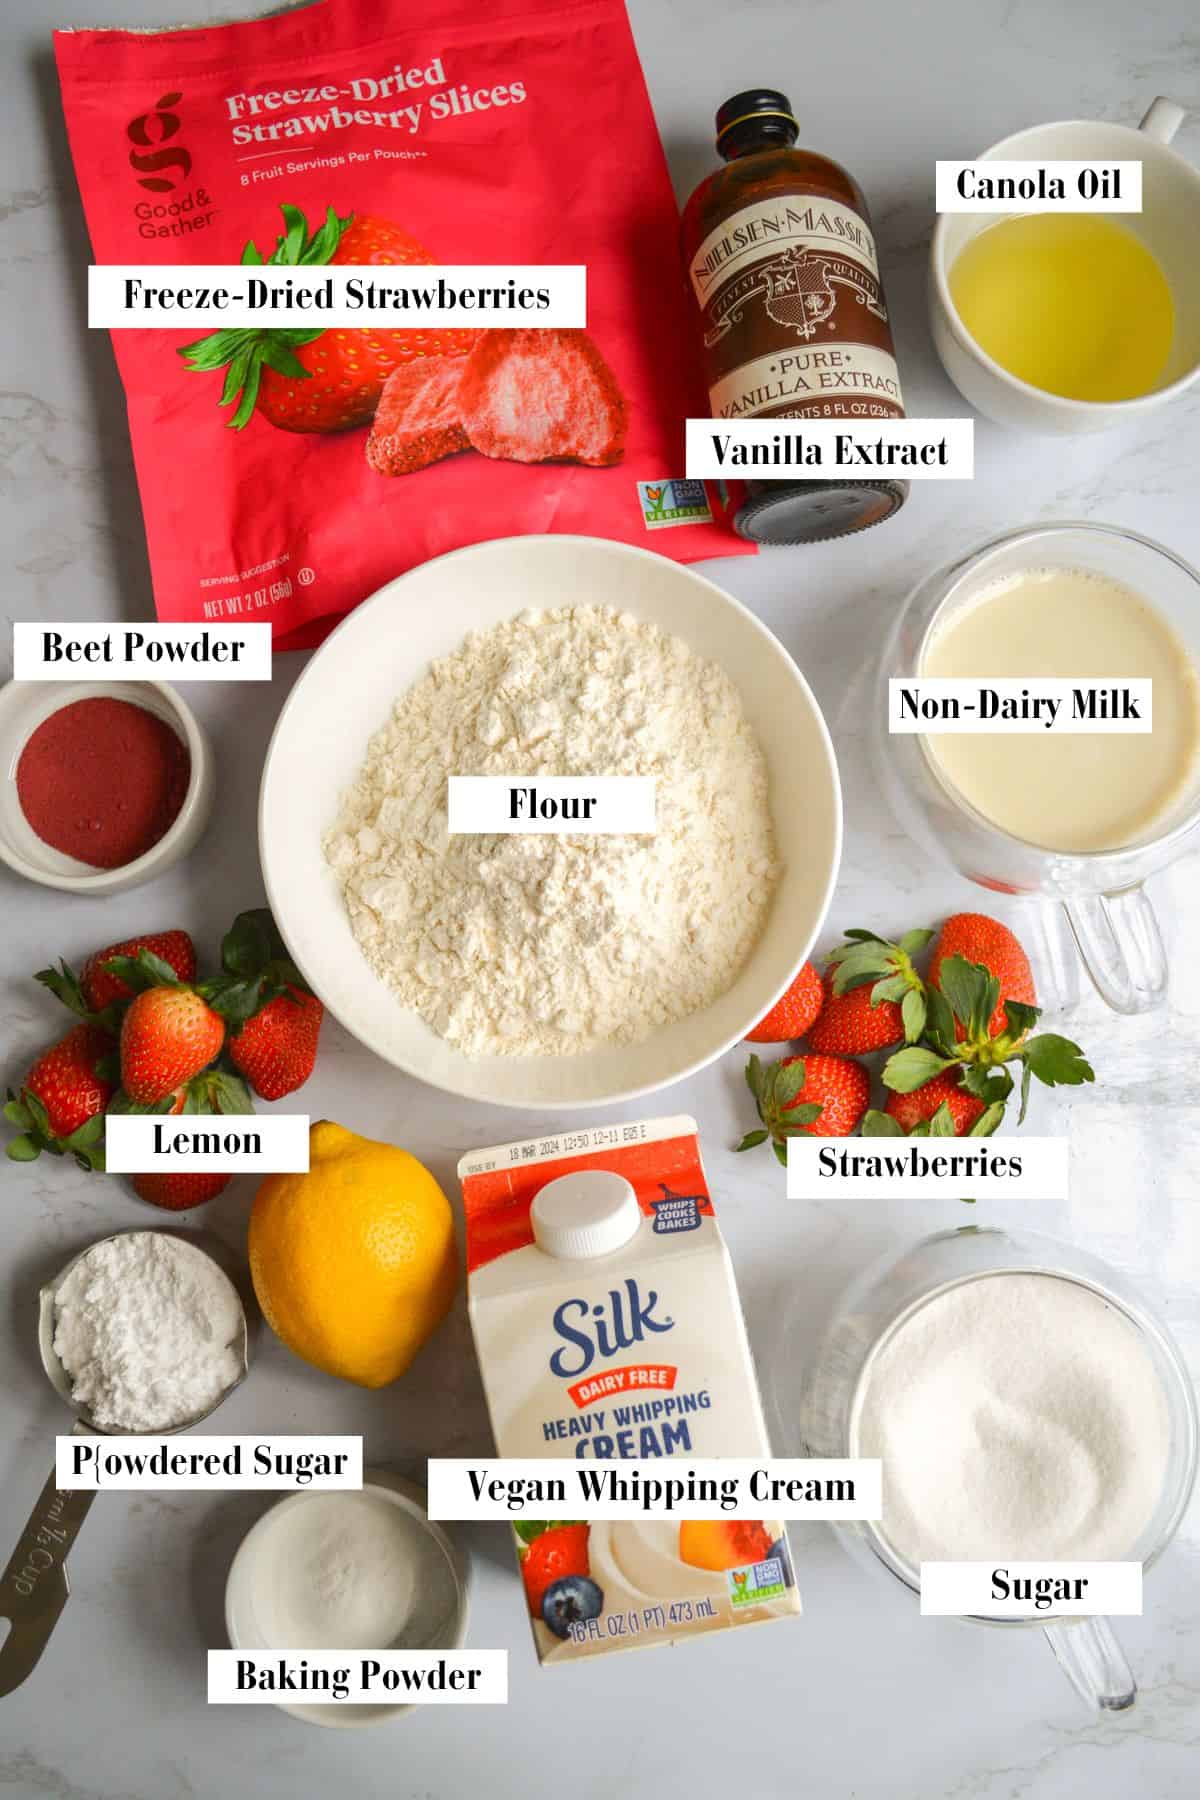 Ingredients needed to make this vegan strawberry cupcake recipe.